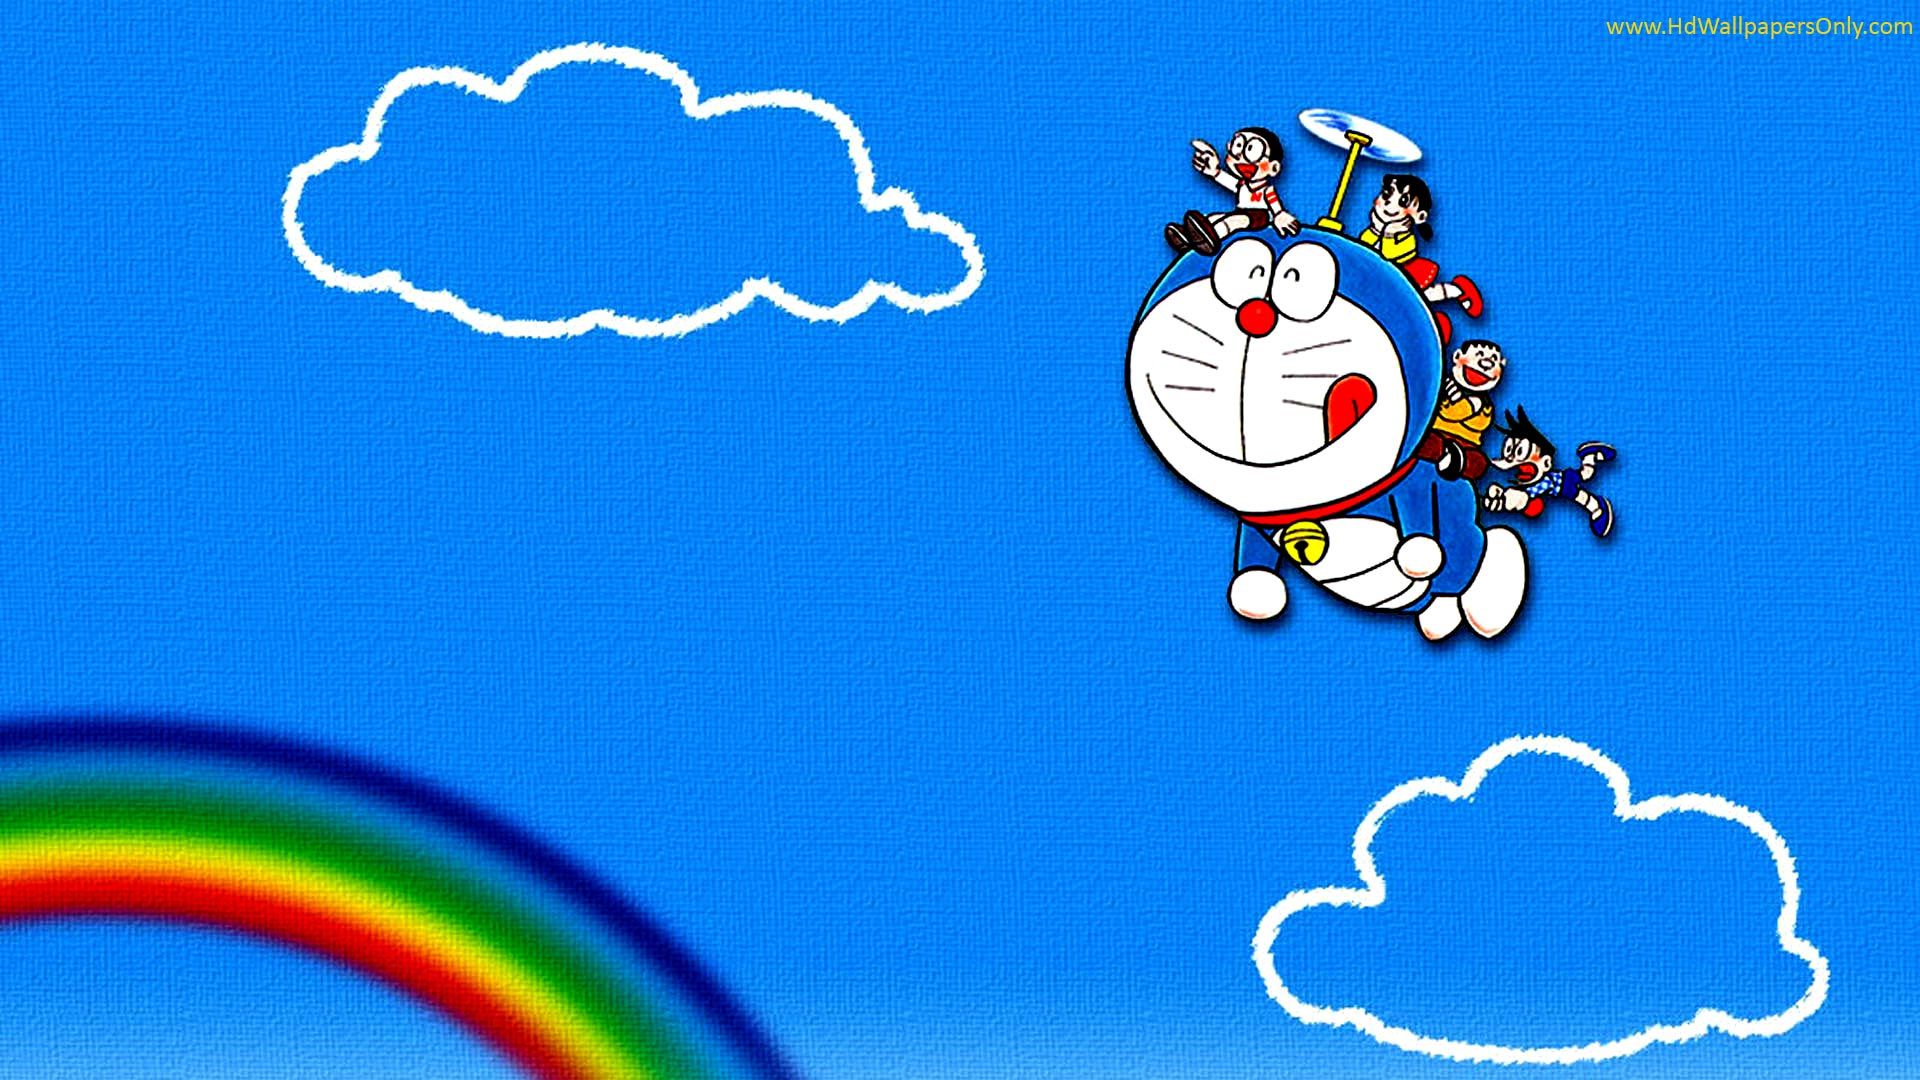 Doraemon Wallpaper Image Picture HD 1295 - Doraemon HD Wallpaper